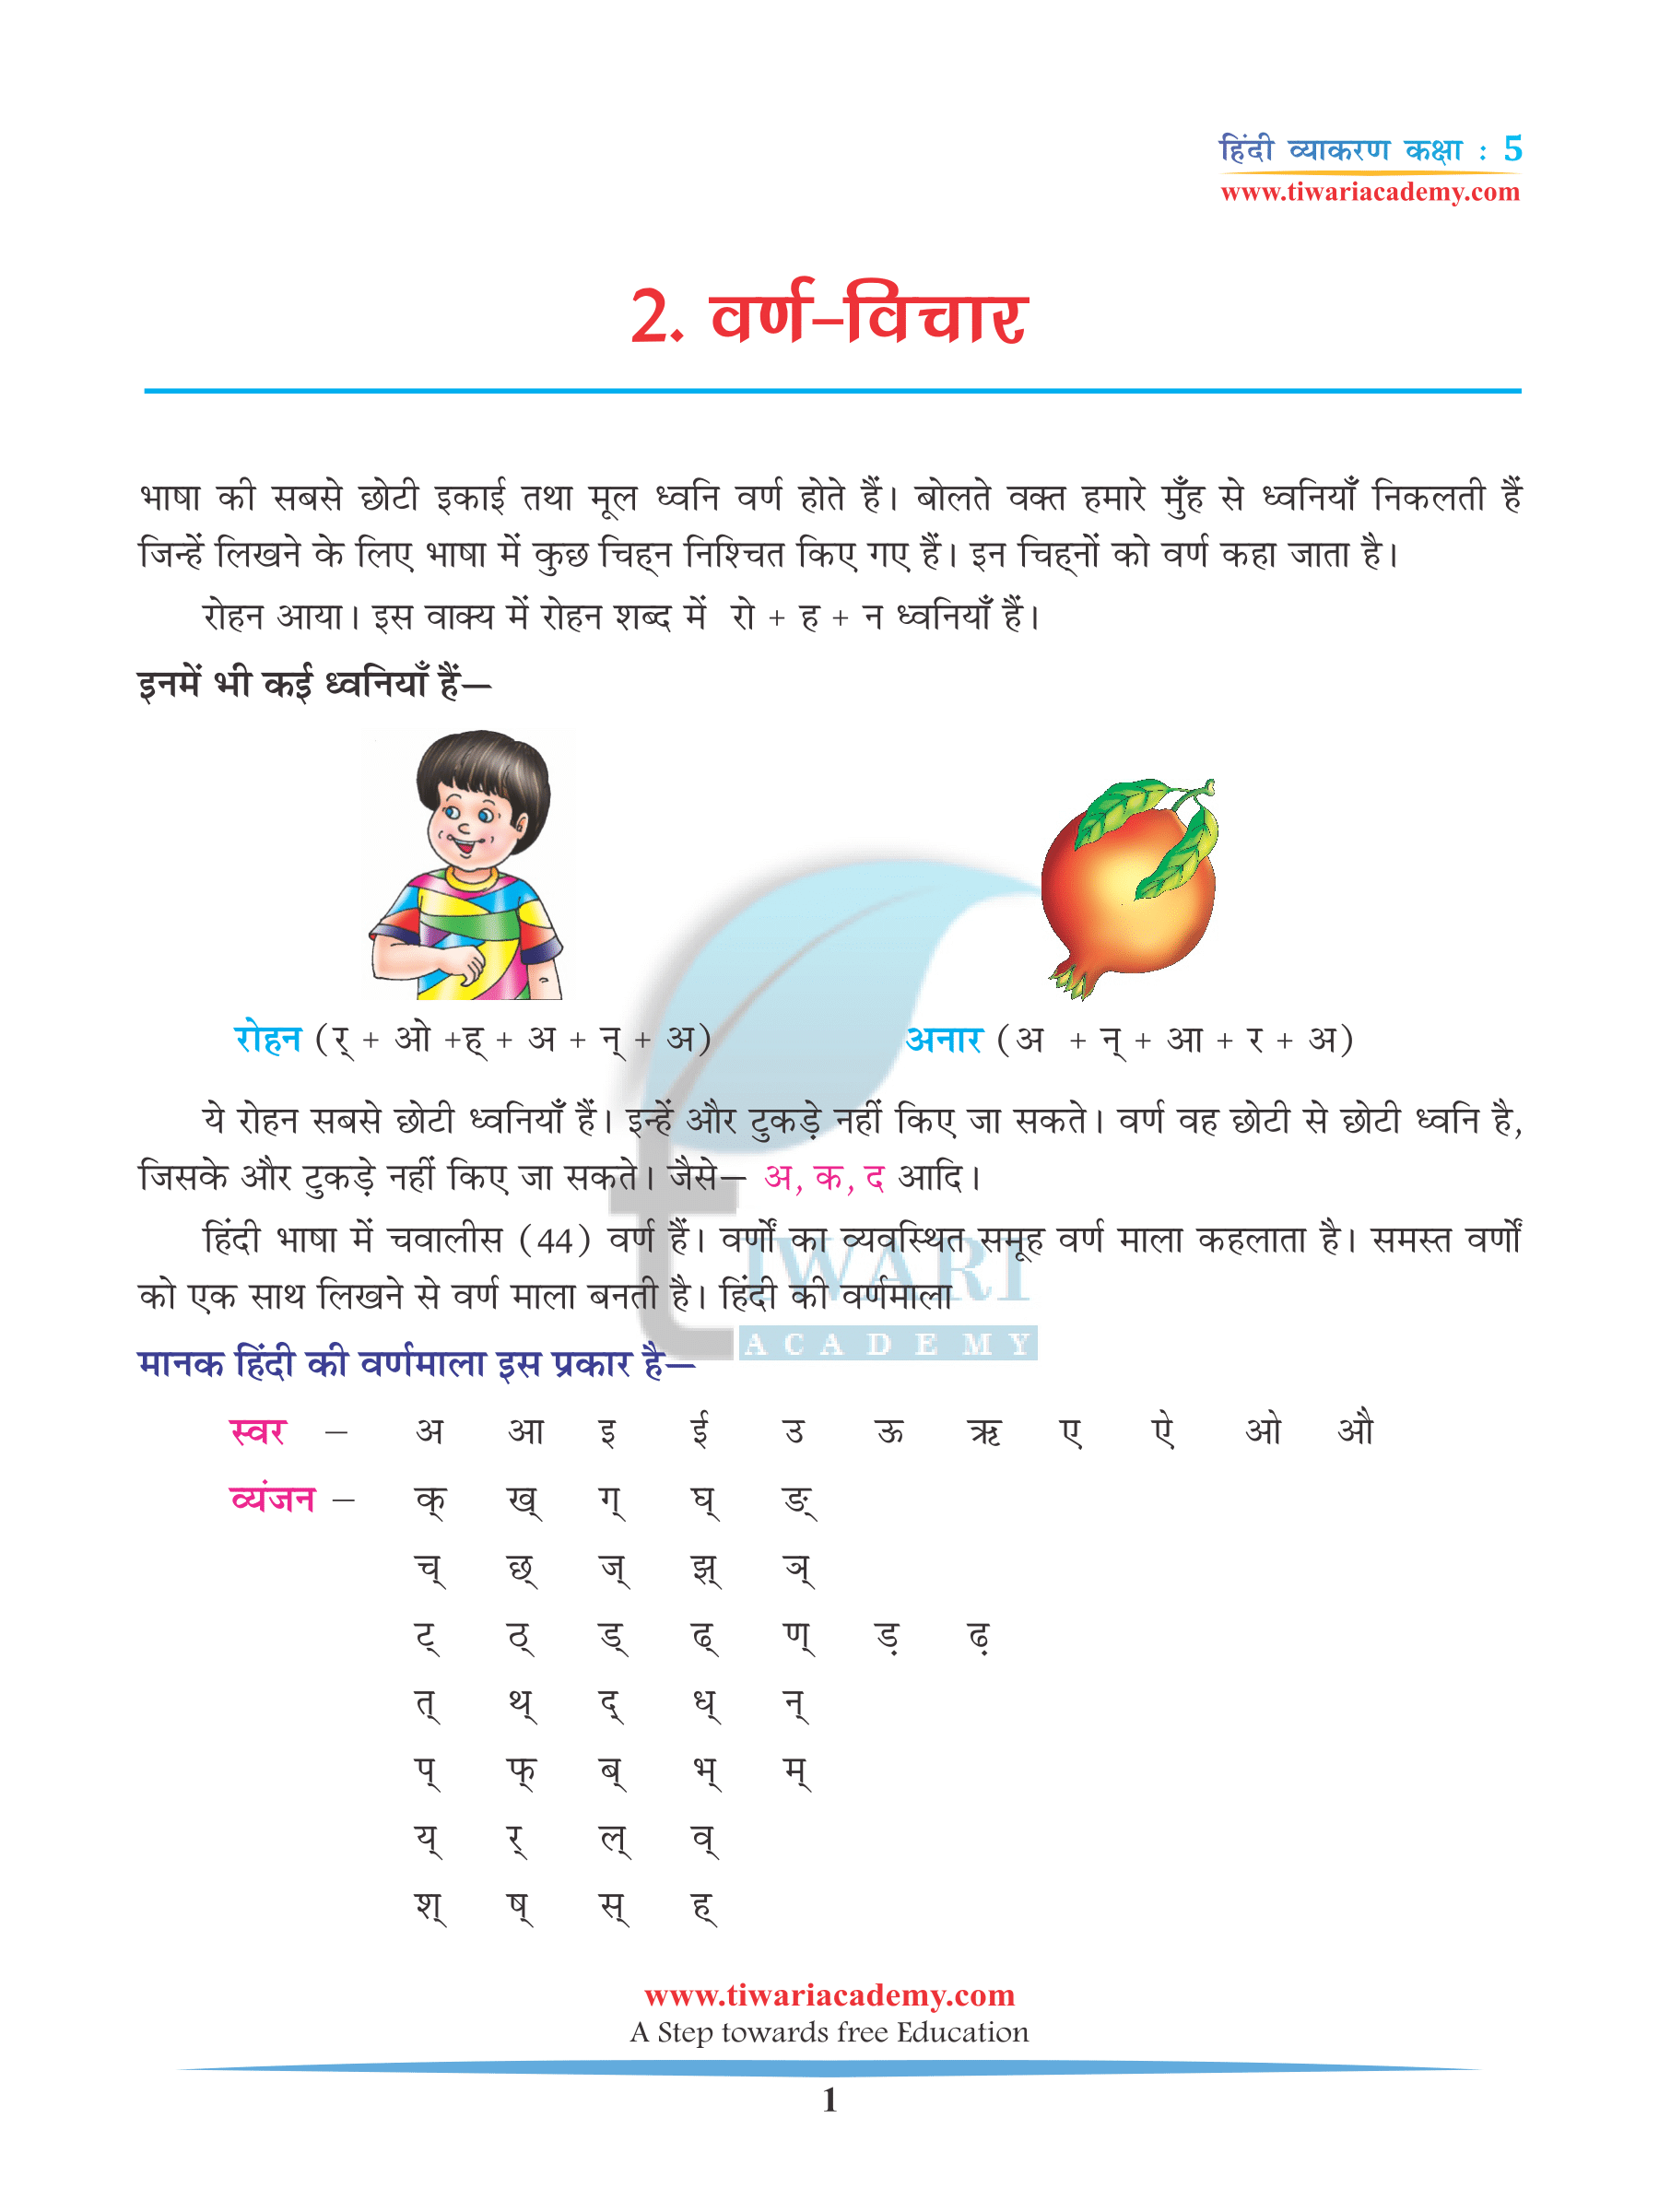 NCERT Solutions for Class 5 Hindi Grammar Chapter 2 Varn Vichar